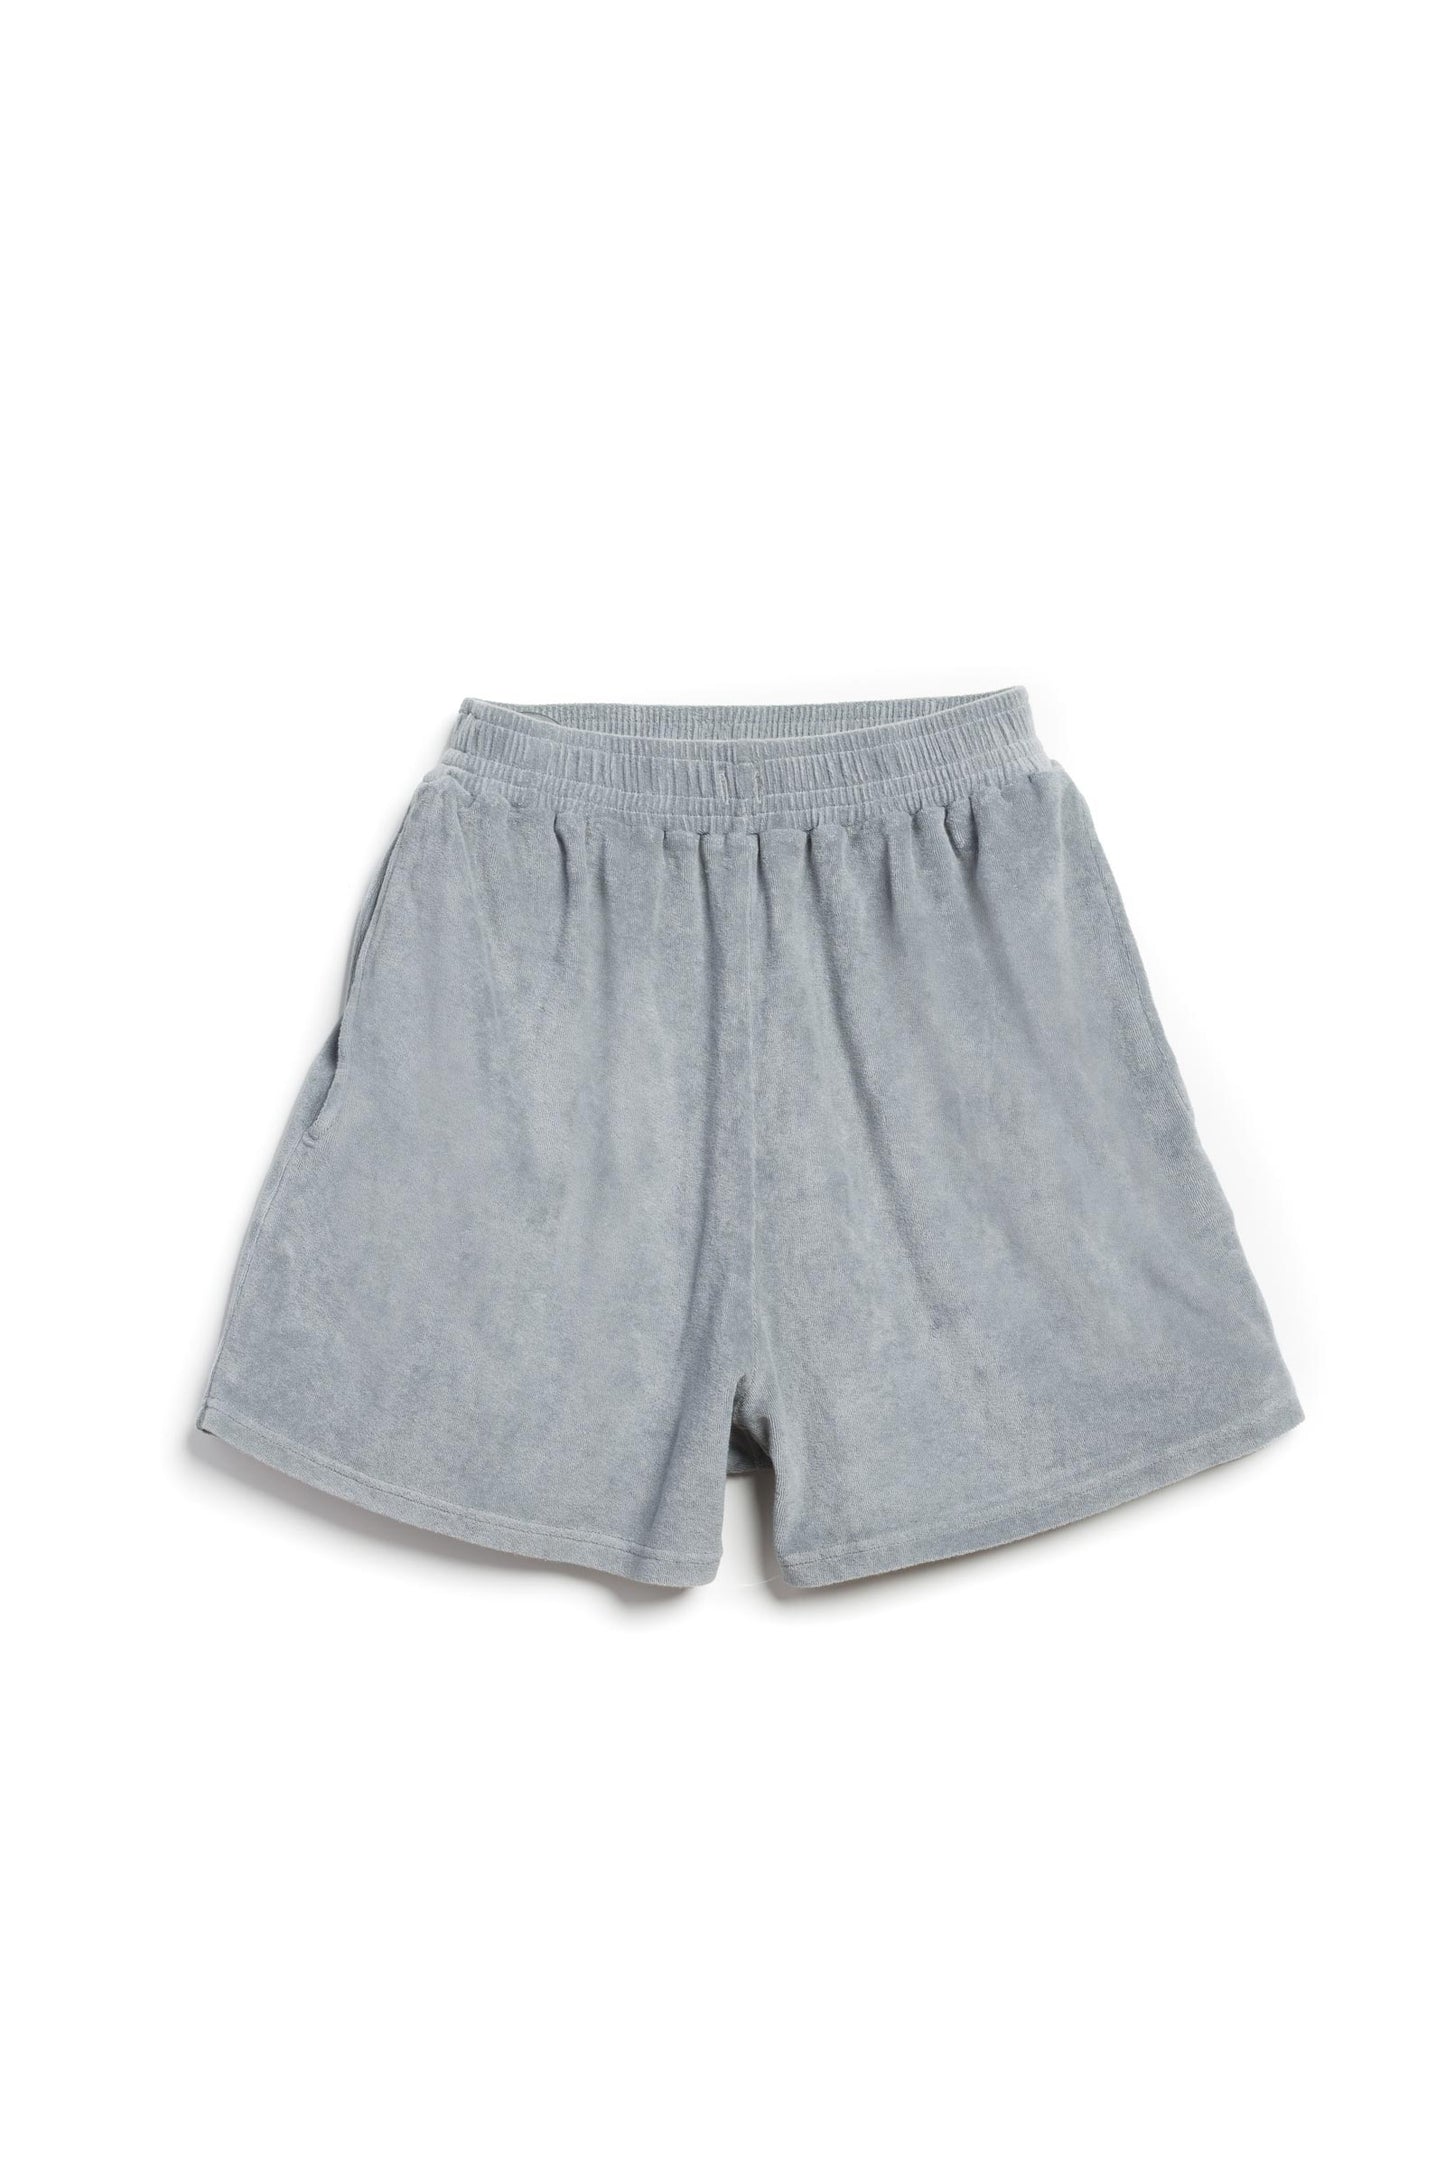 Steel Gray Cotton Shorts